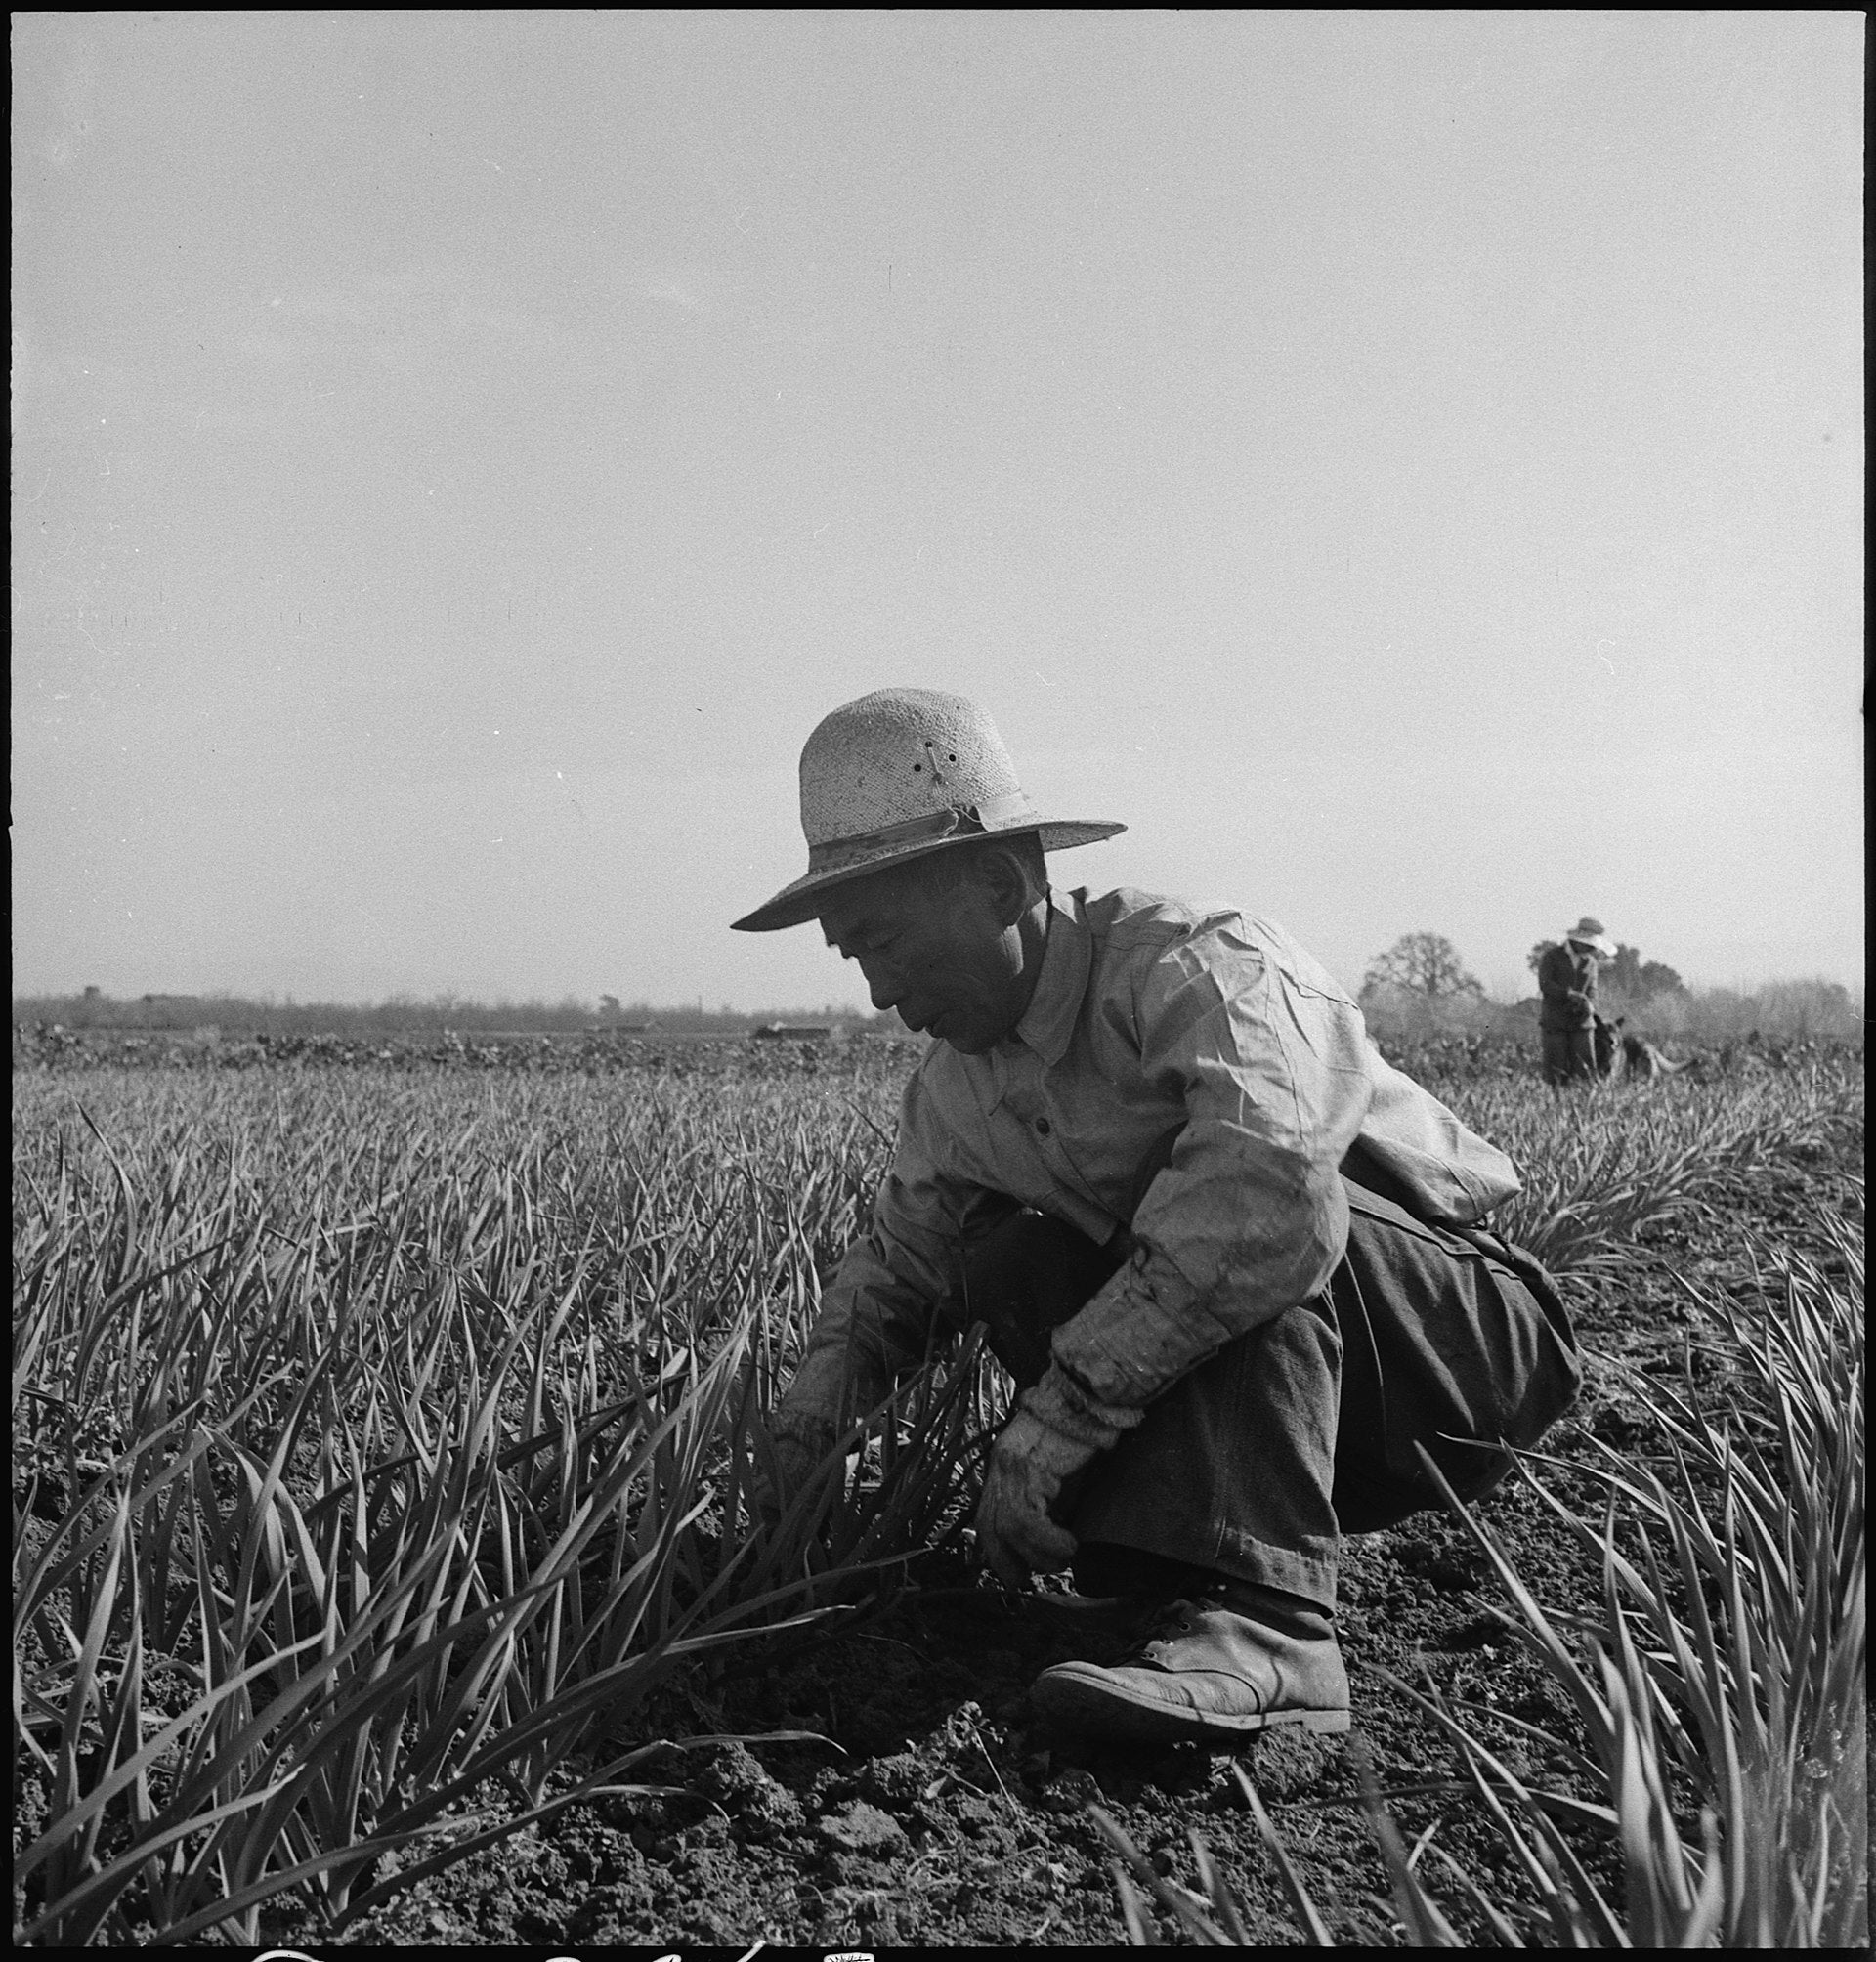 Japanese American farmer working in a field in California